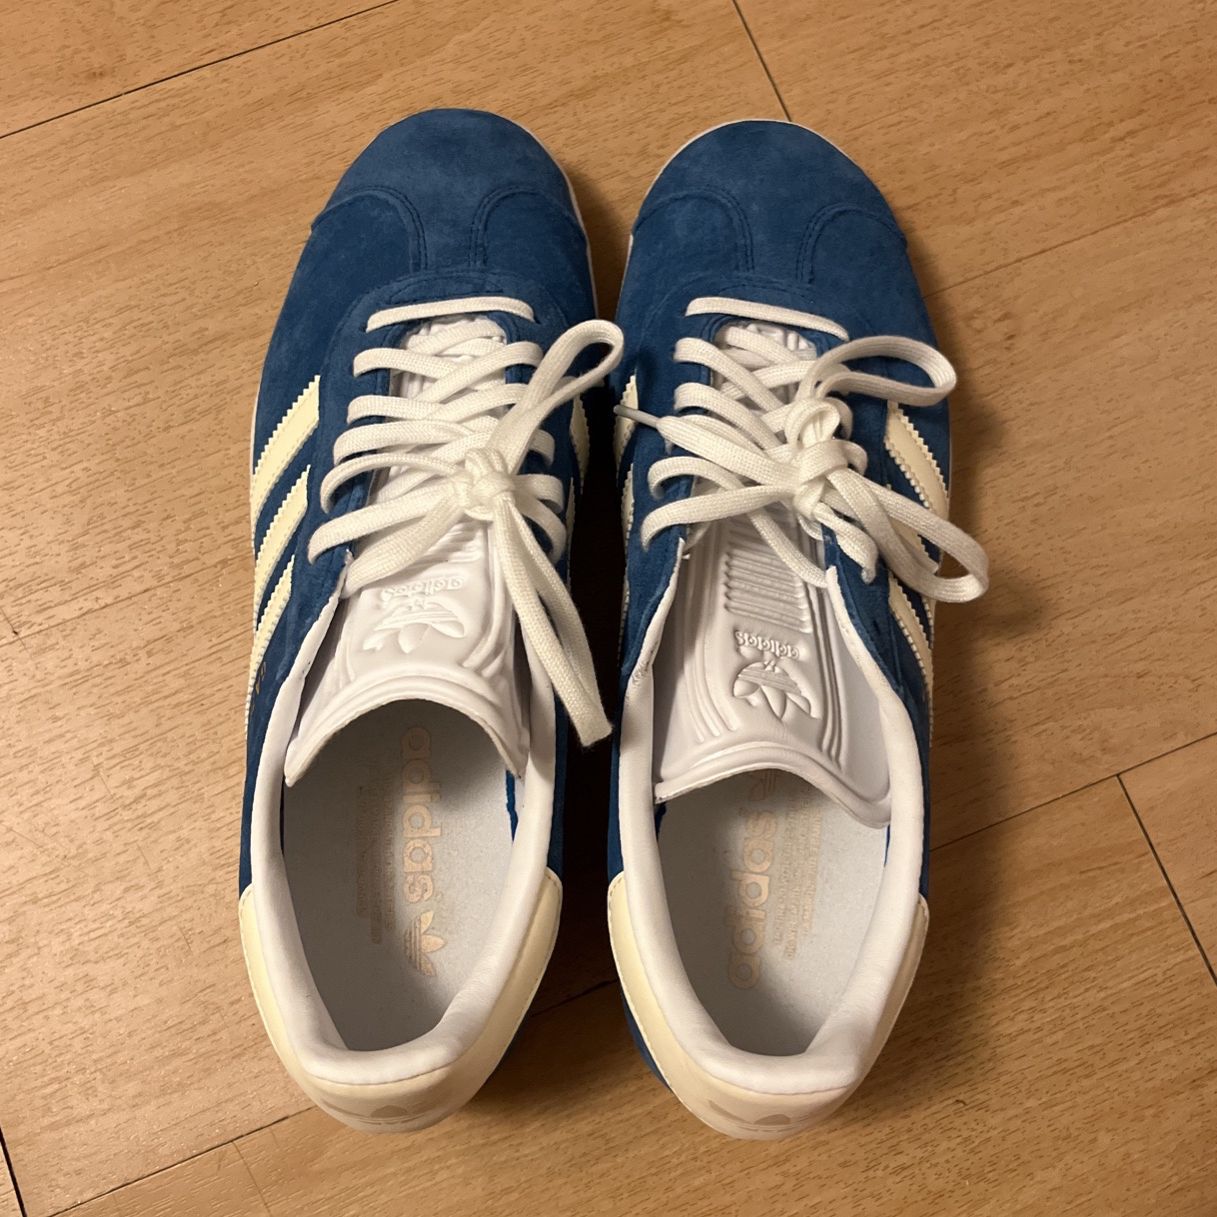 Adidas Gazelle Blue Women’s 9